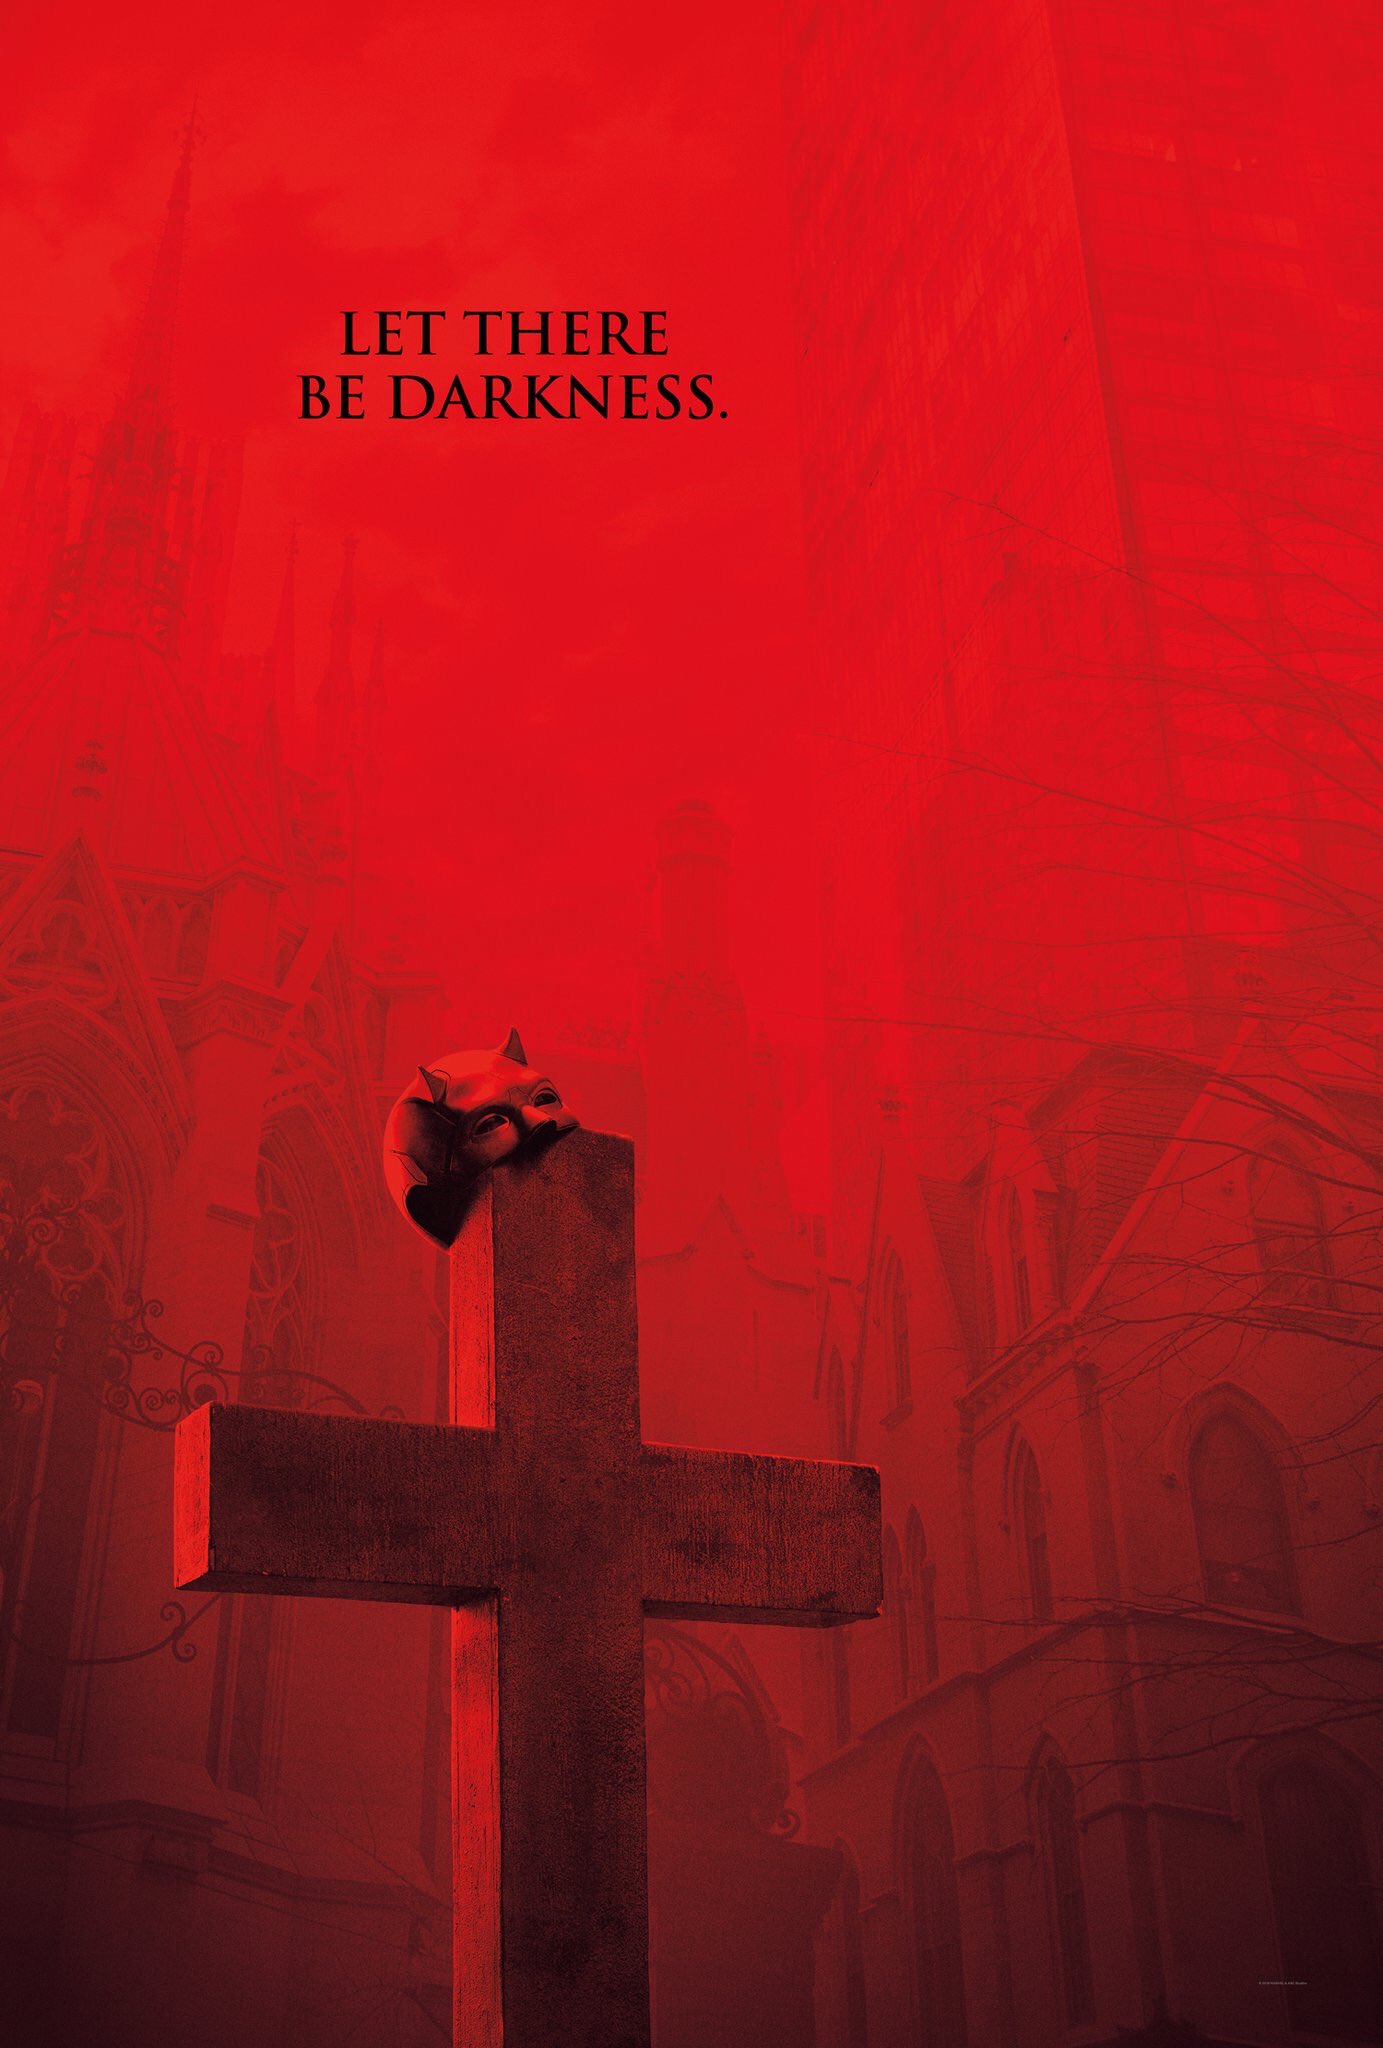 DneDq AU4AA1TXH Daredevil 3 Gets an Ominous New Poster